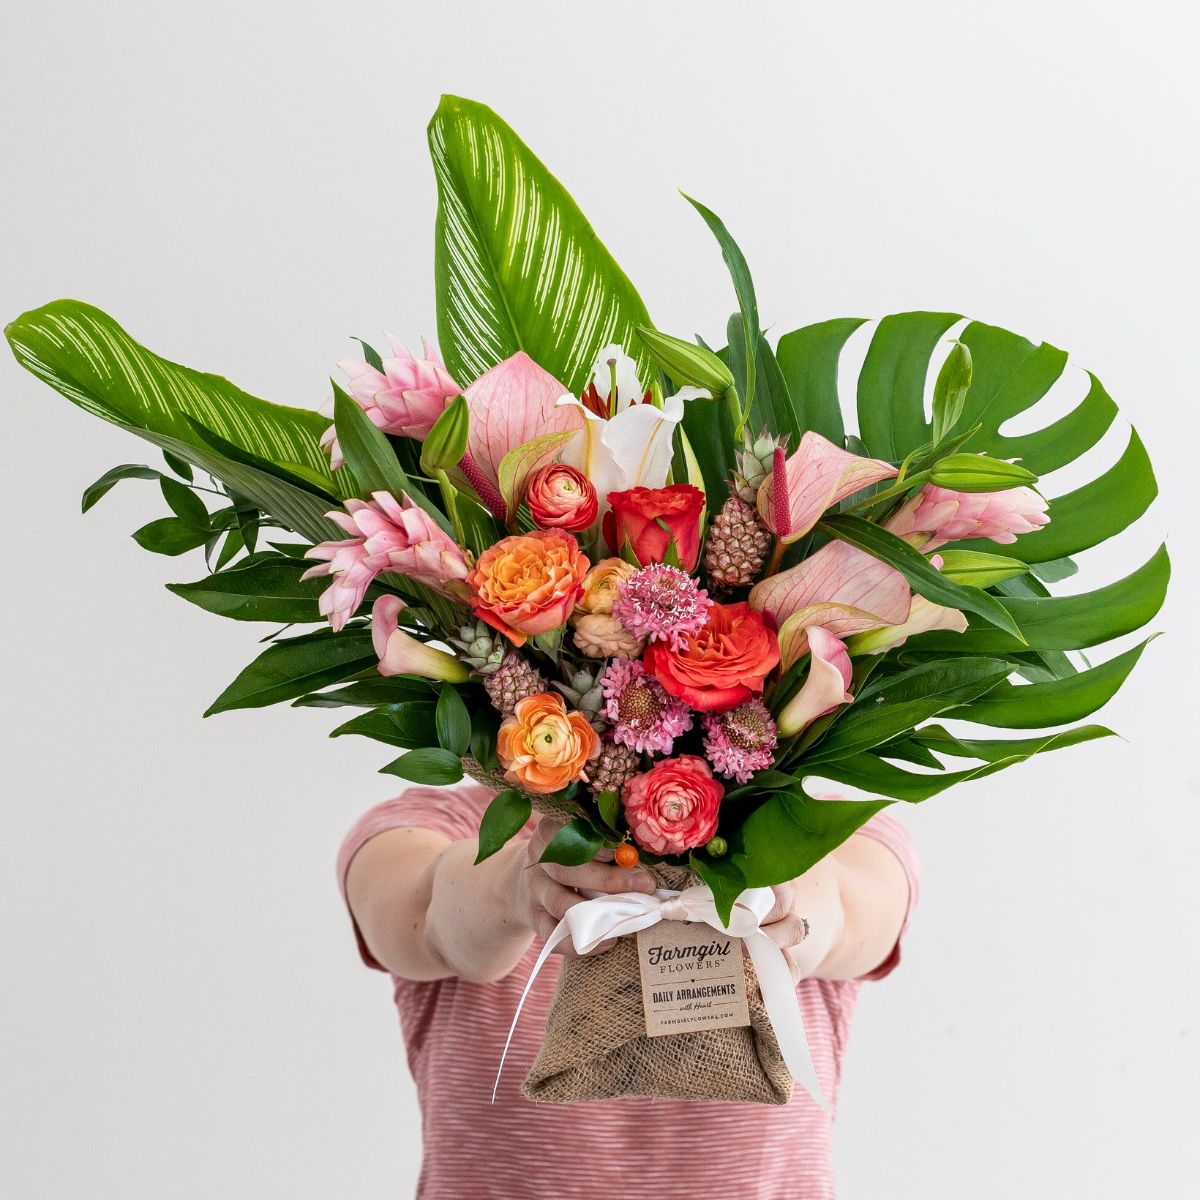 best Instagram flower accounts - Farmgirl flowers floral account